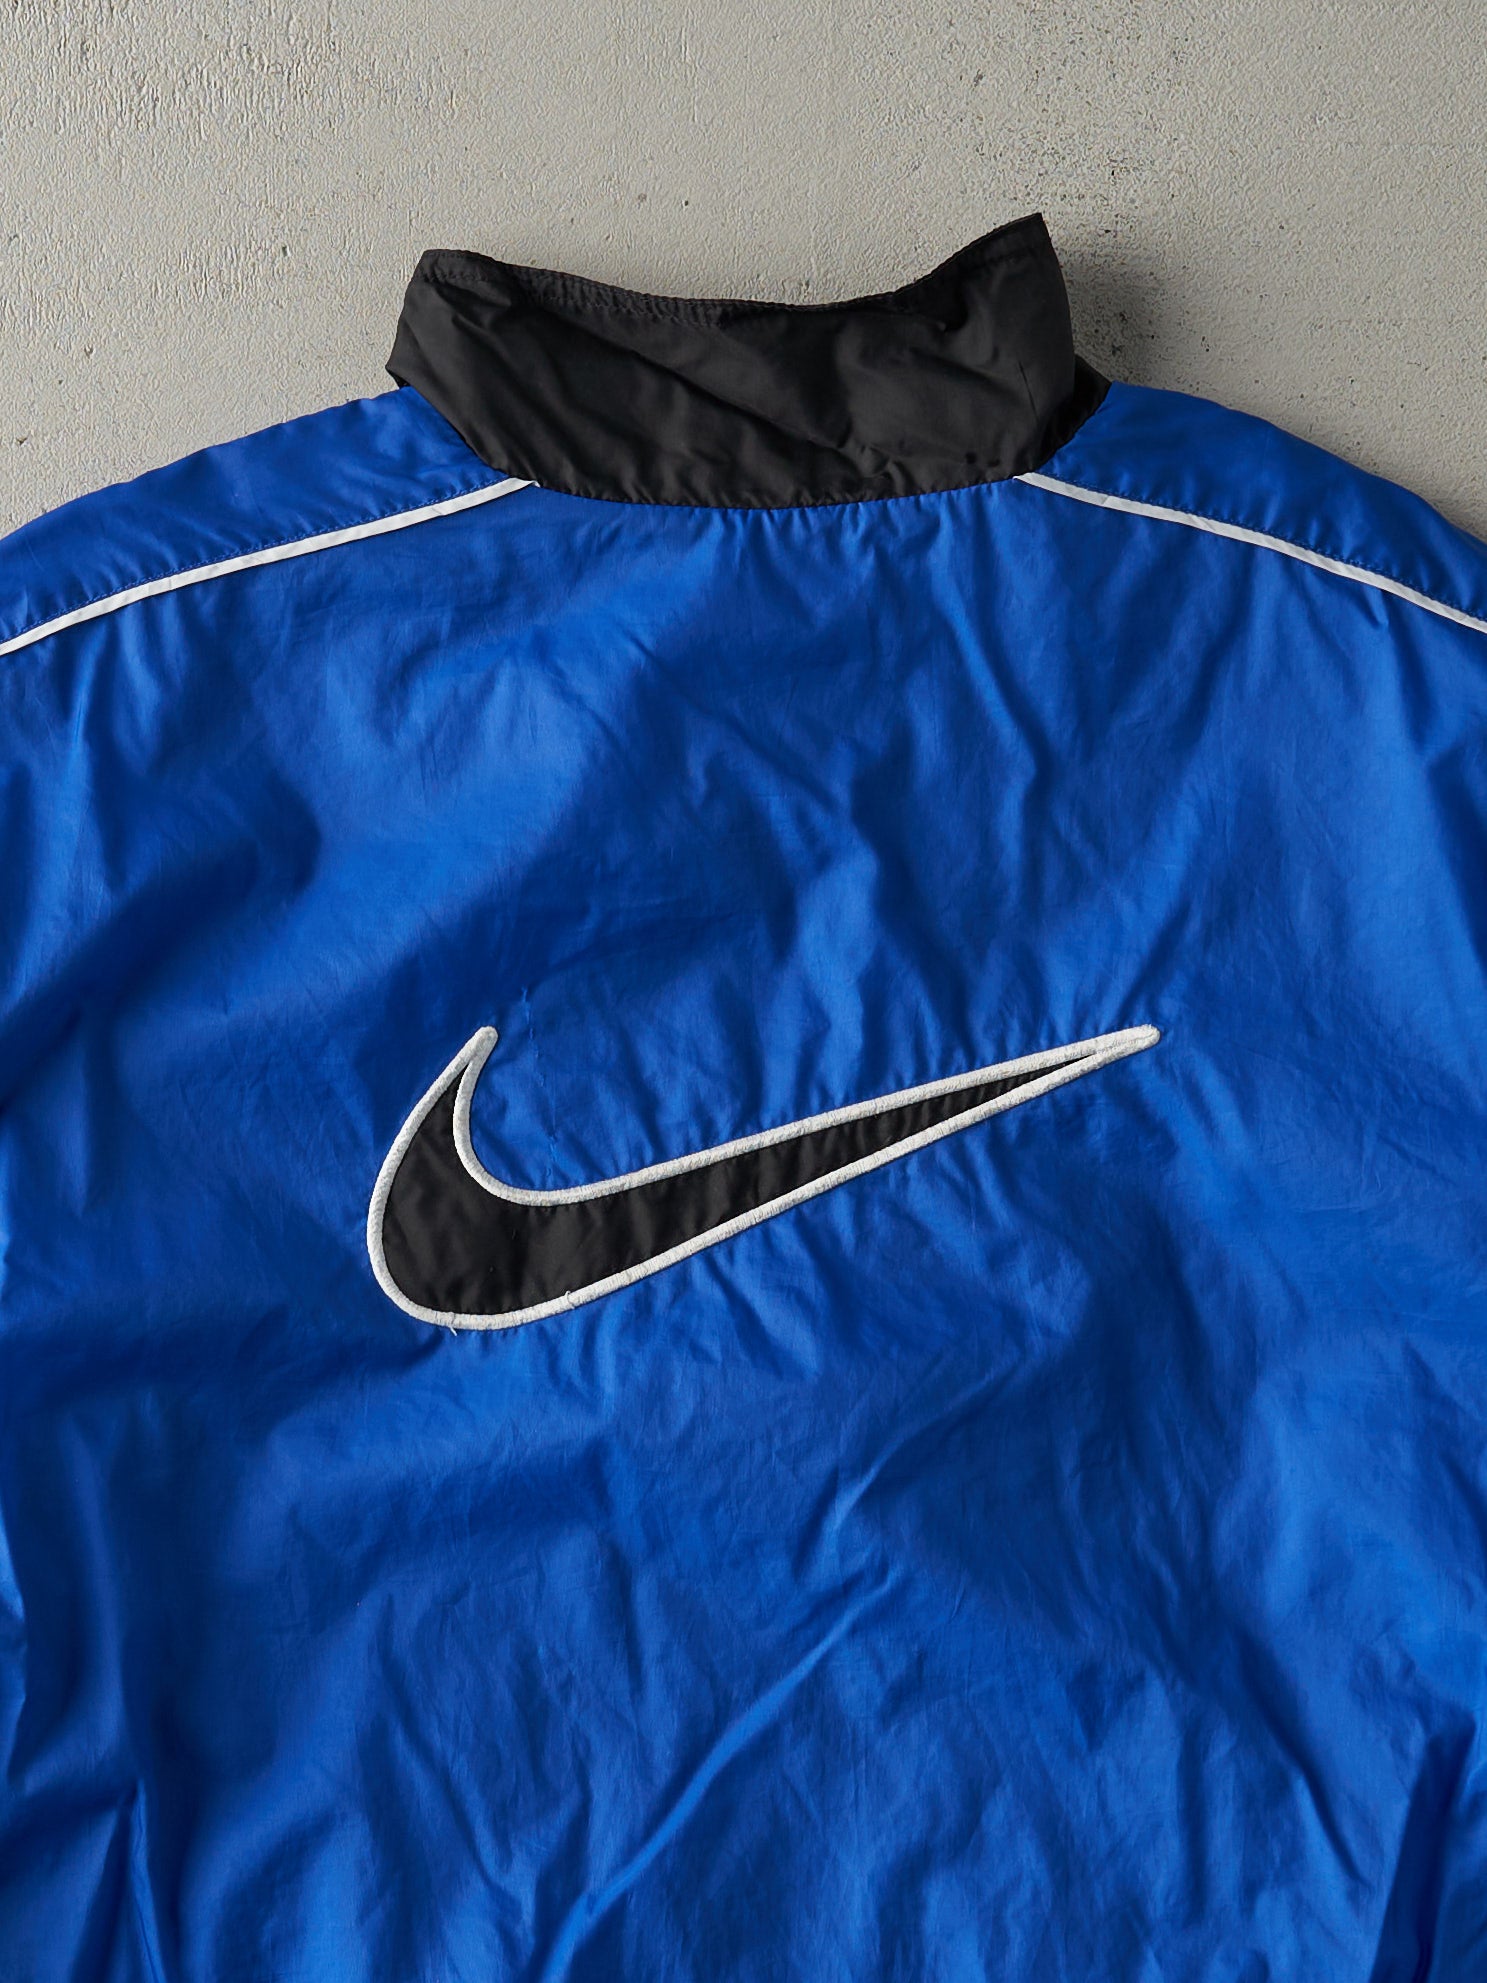 Vintage 90s Blue & Black Nike Windbreaker Jacket (M)